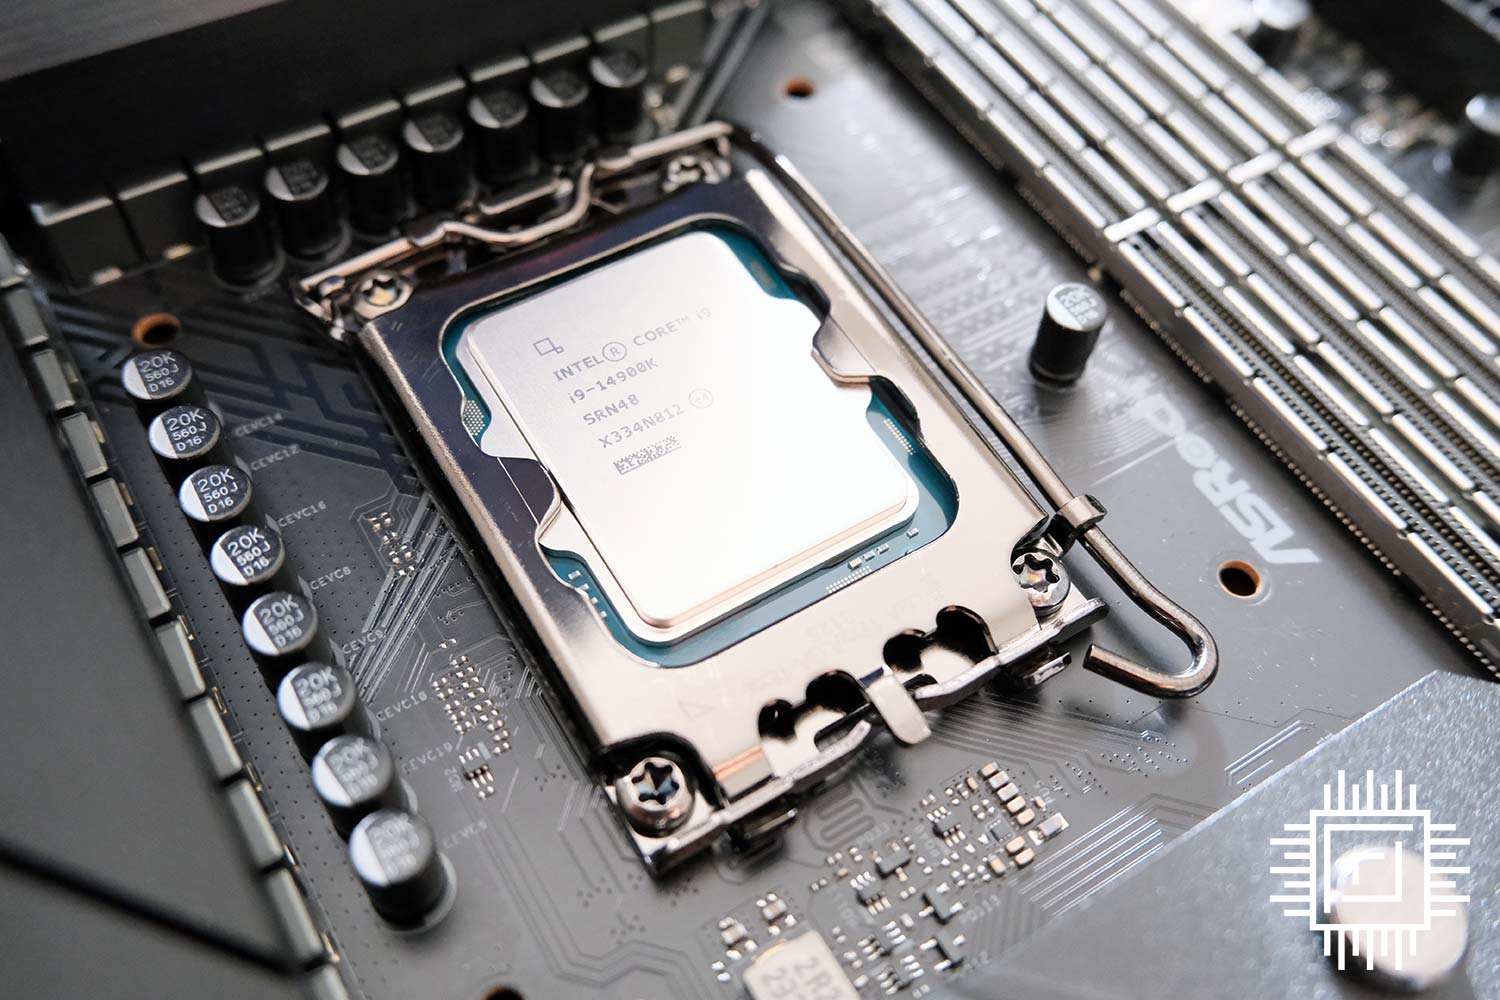 Intel Core i9-14900K CPU sitting in a motherboard.